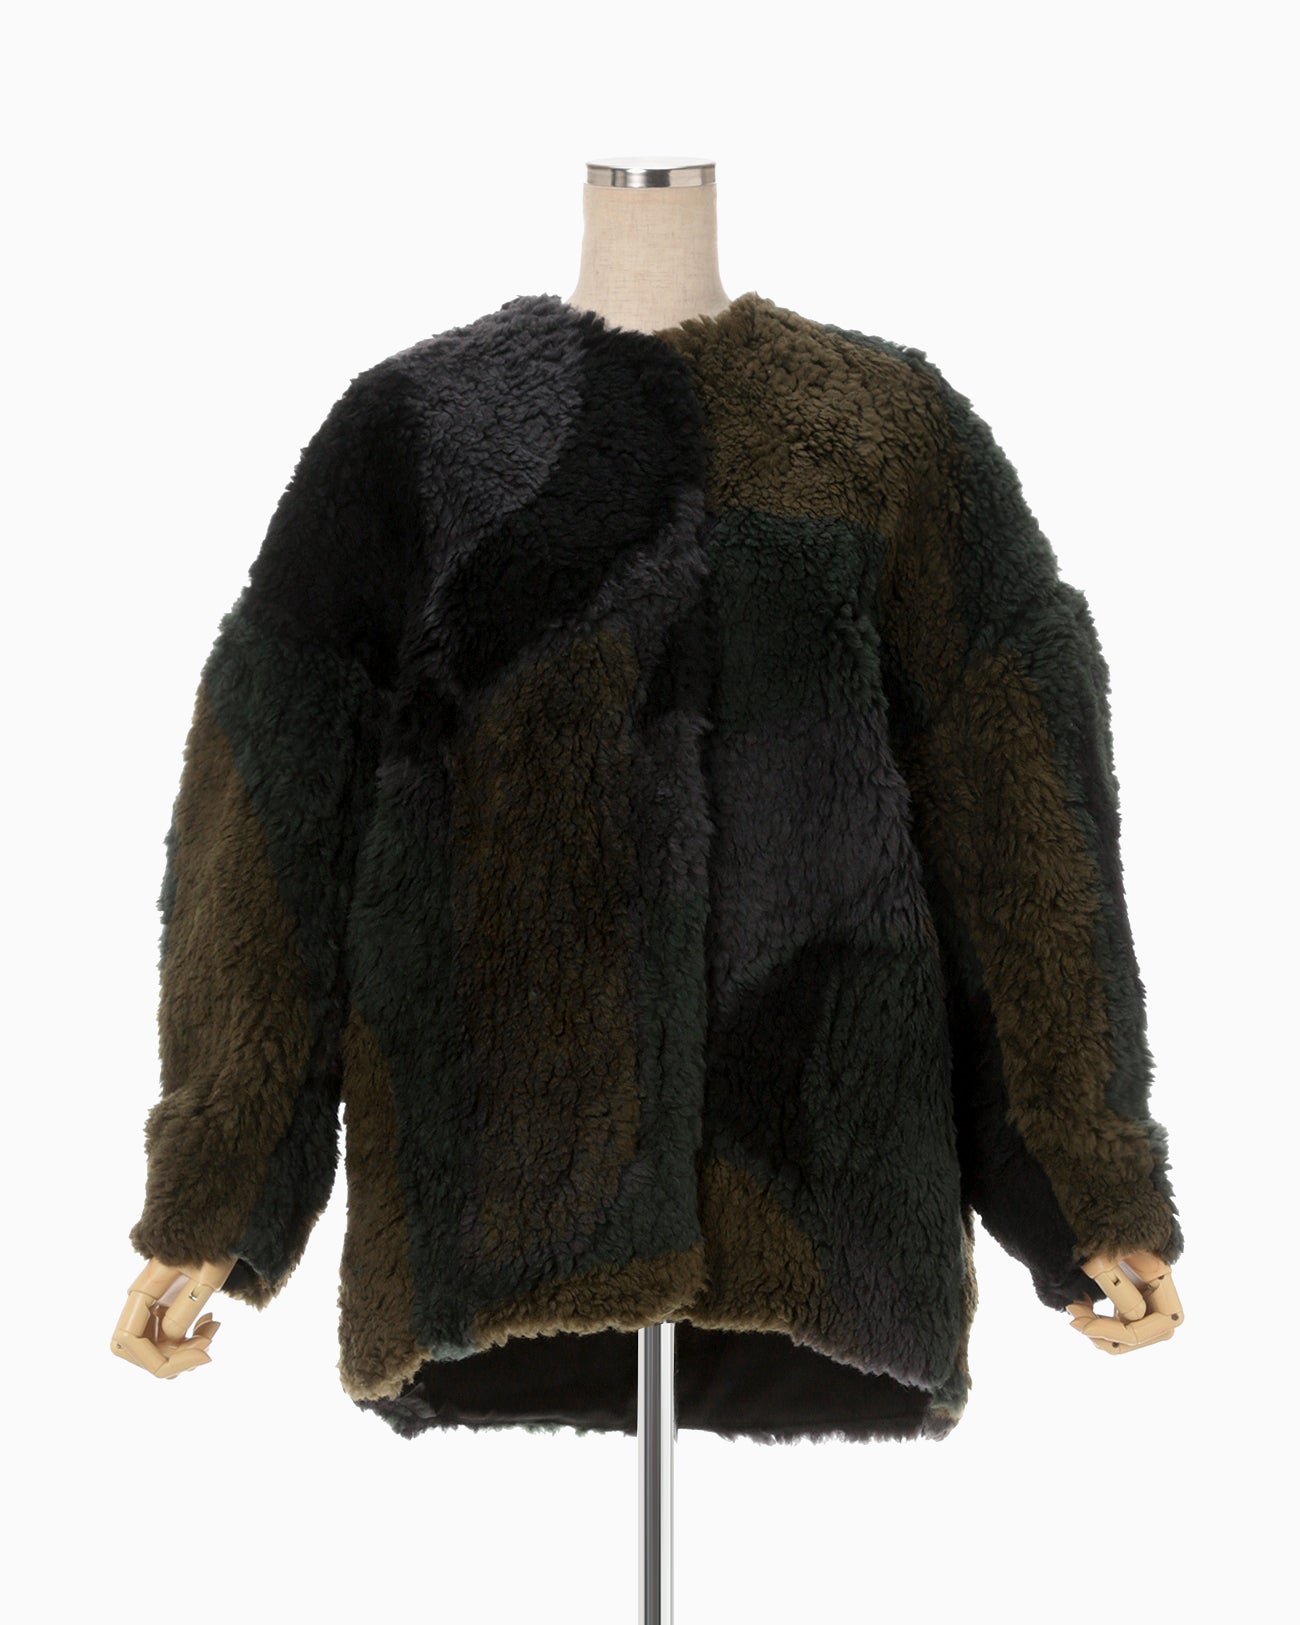 Sliver Knitted Fluffy Wool Jacket - khaki